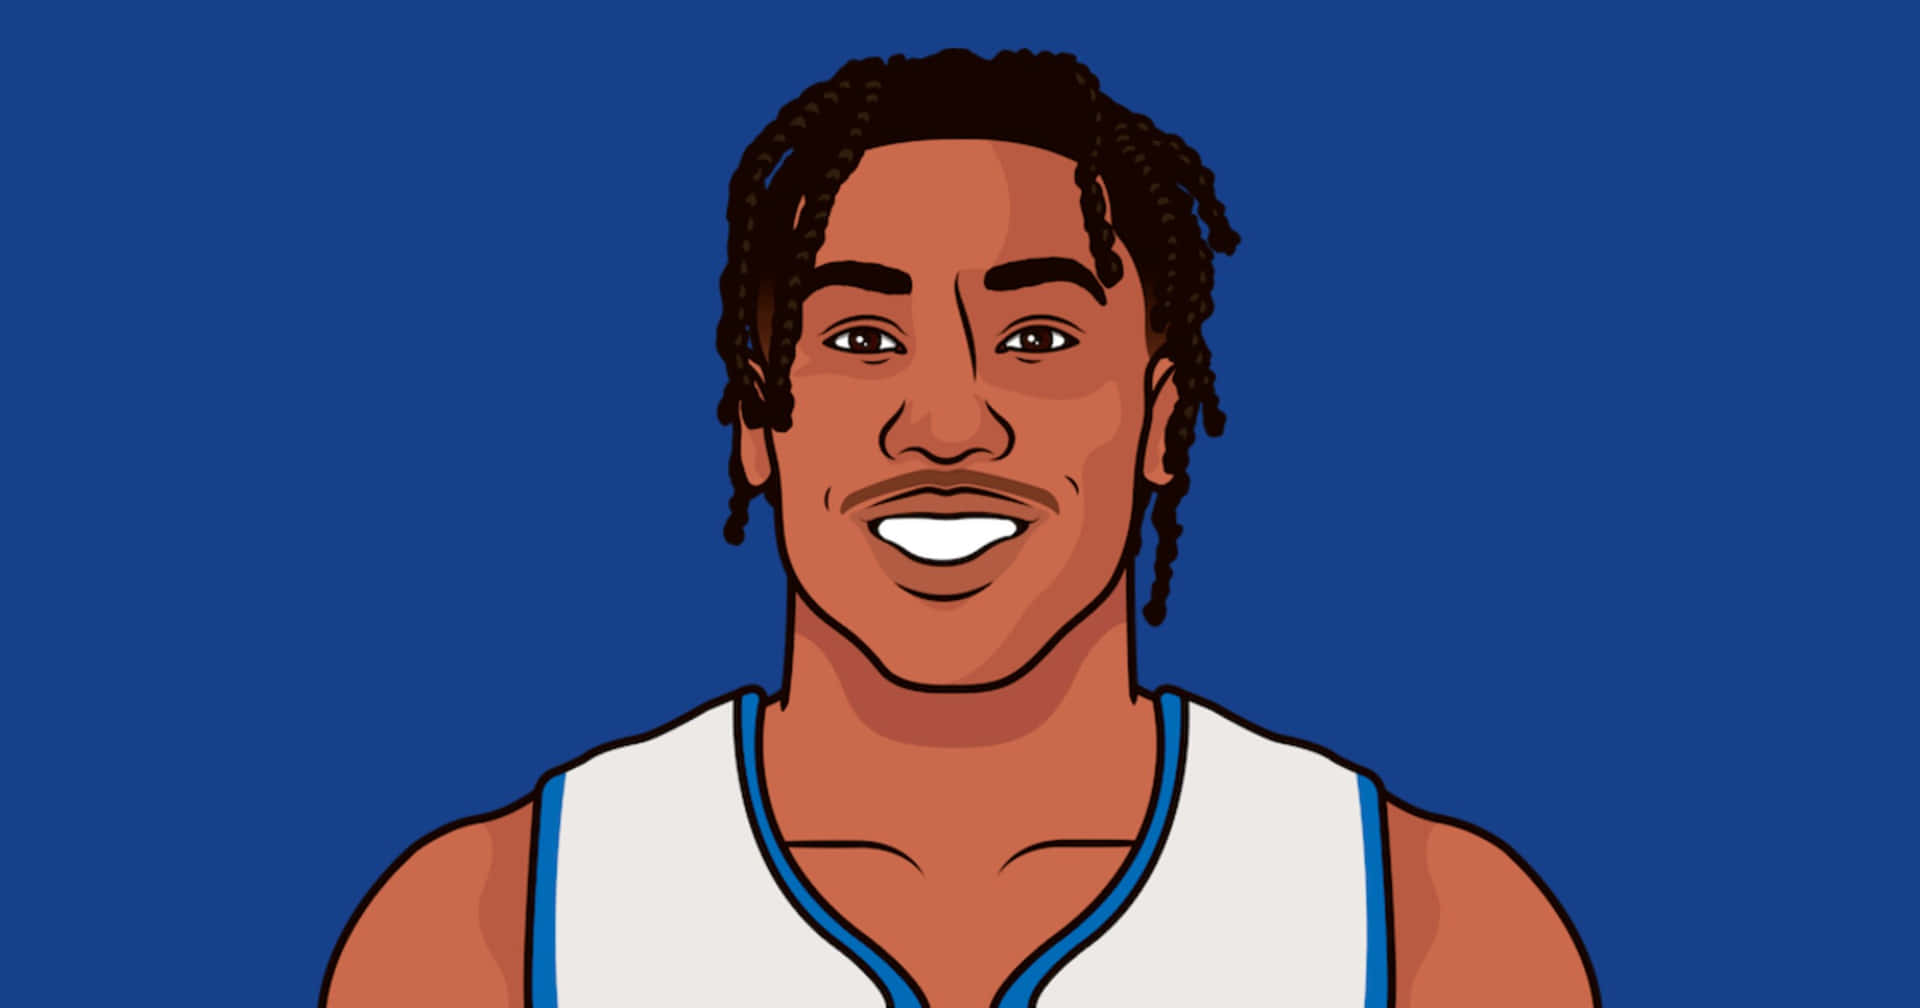 Animated Basketball Player Portrait Wallpaper